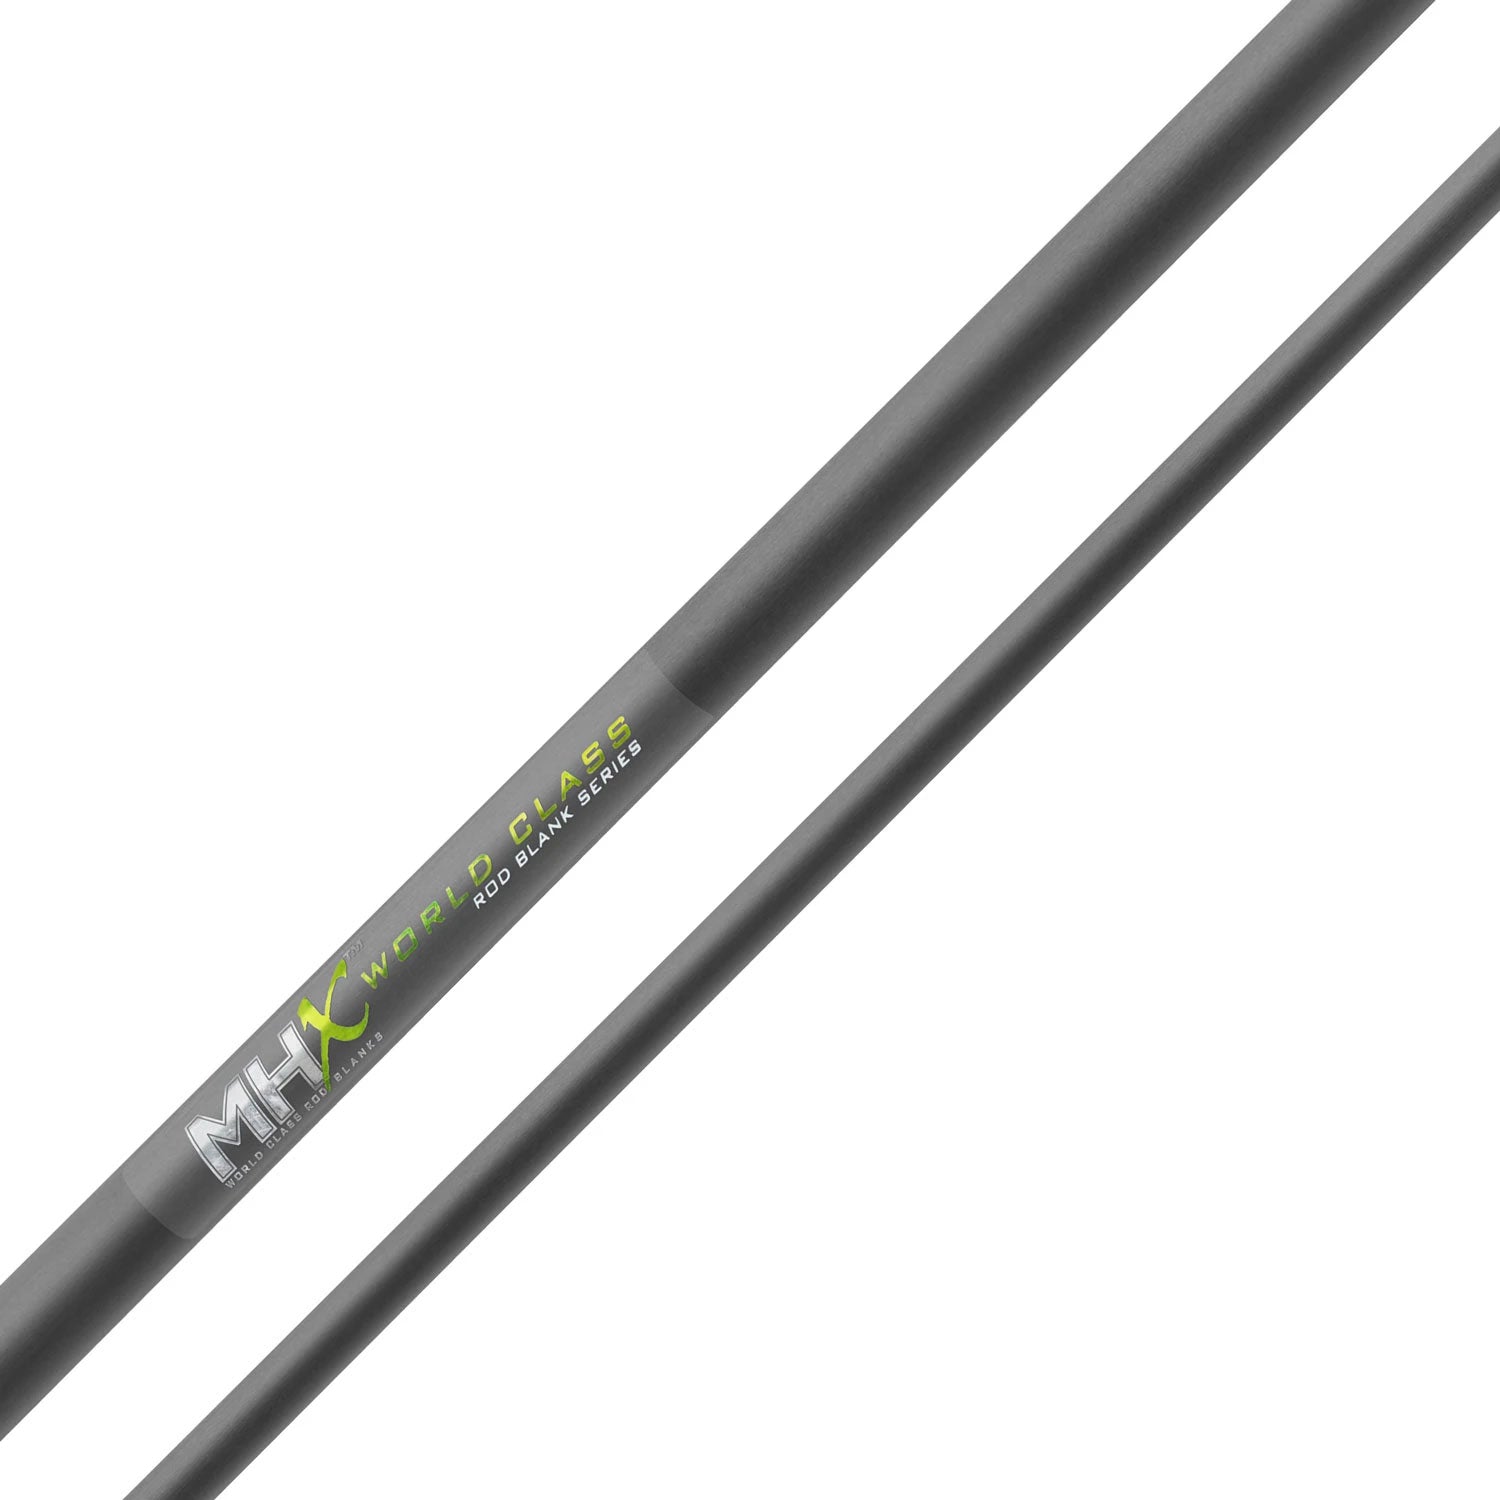 MHX 7'0 Med-Heavy Light Saltwater Rod Blank - L844